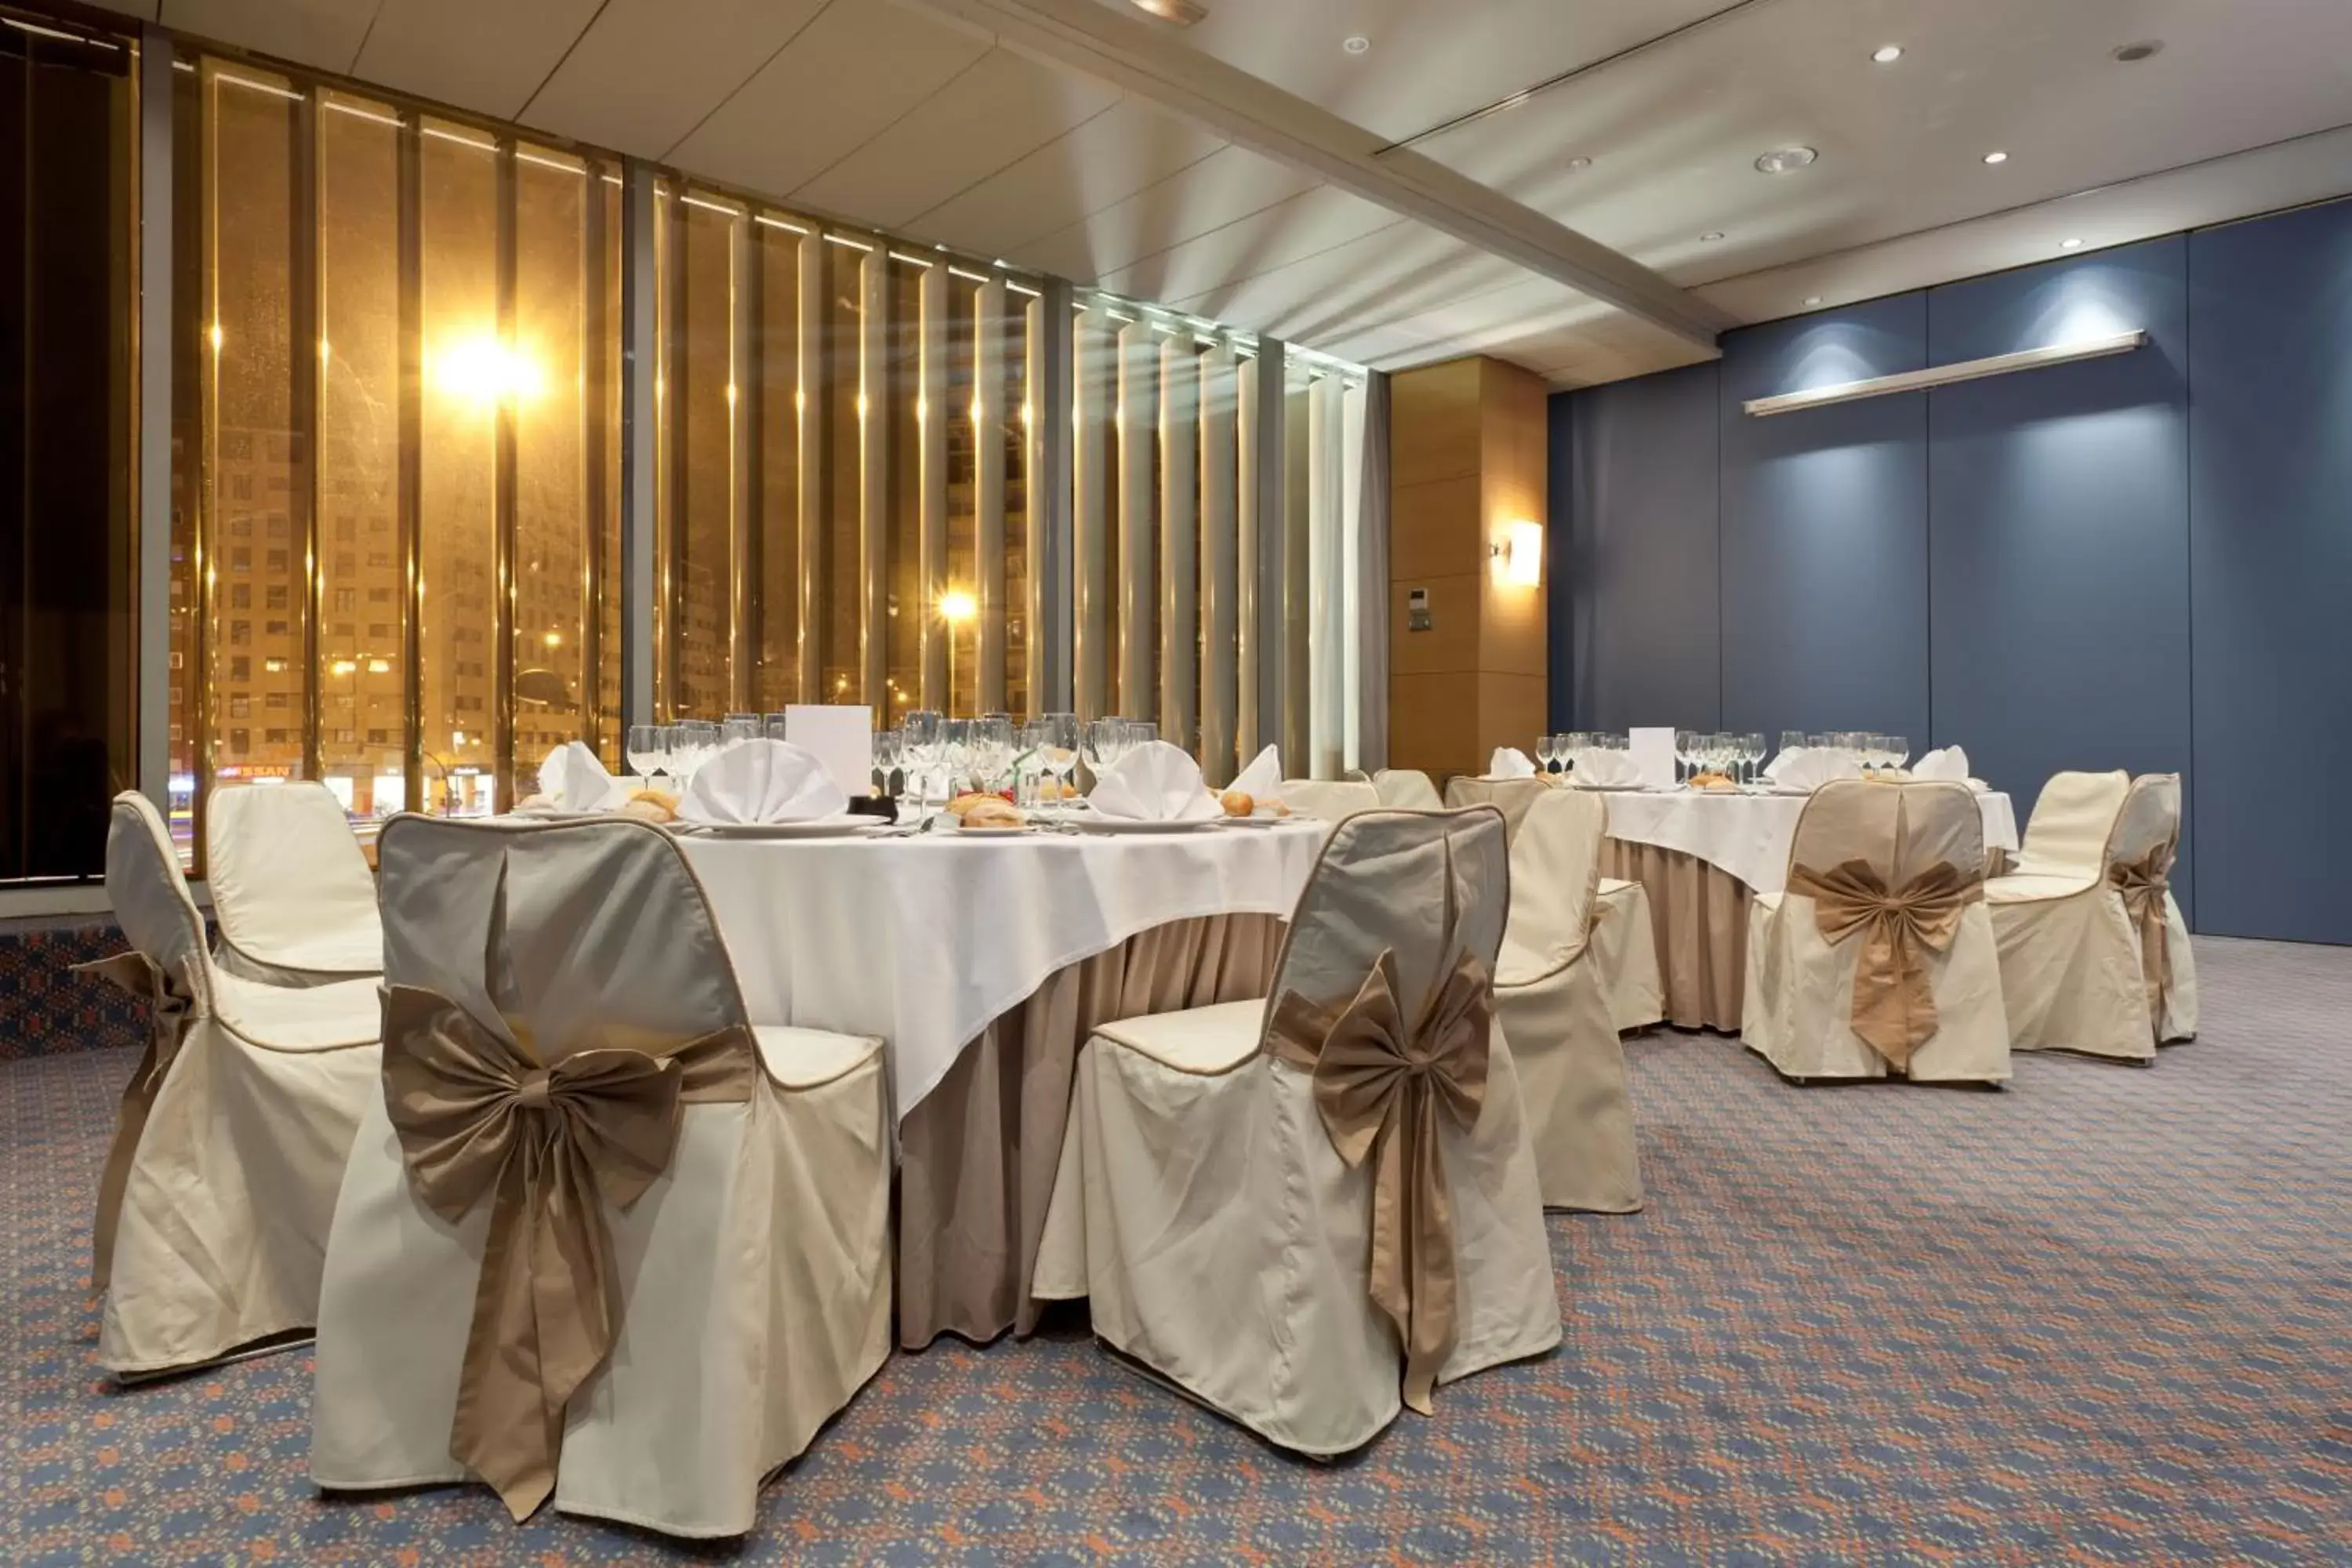 Restaurant/places to eat, Banquet Facilities in Senator Parque Central Hotel